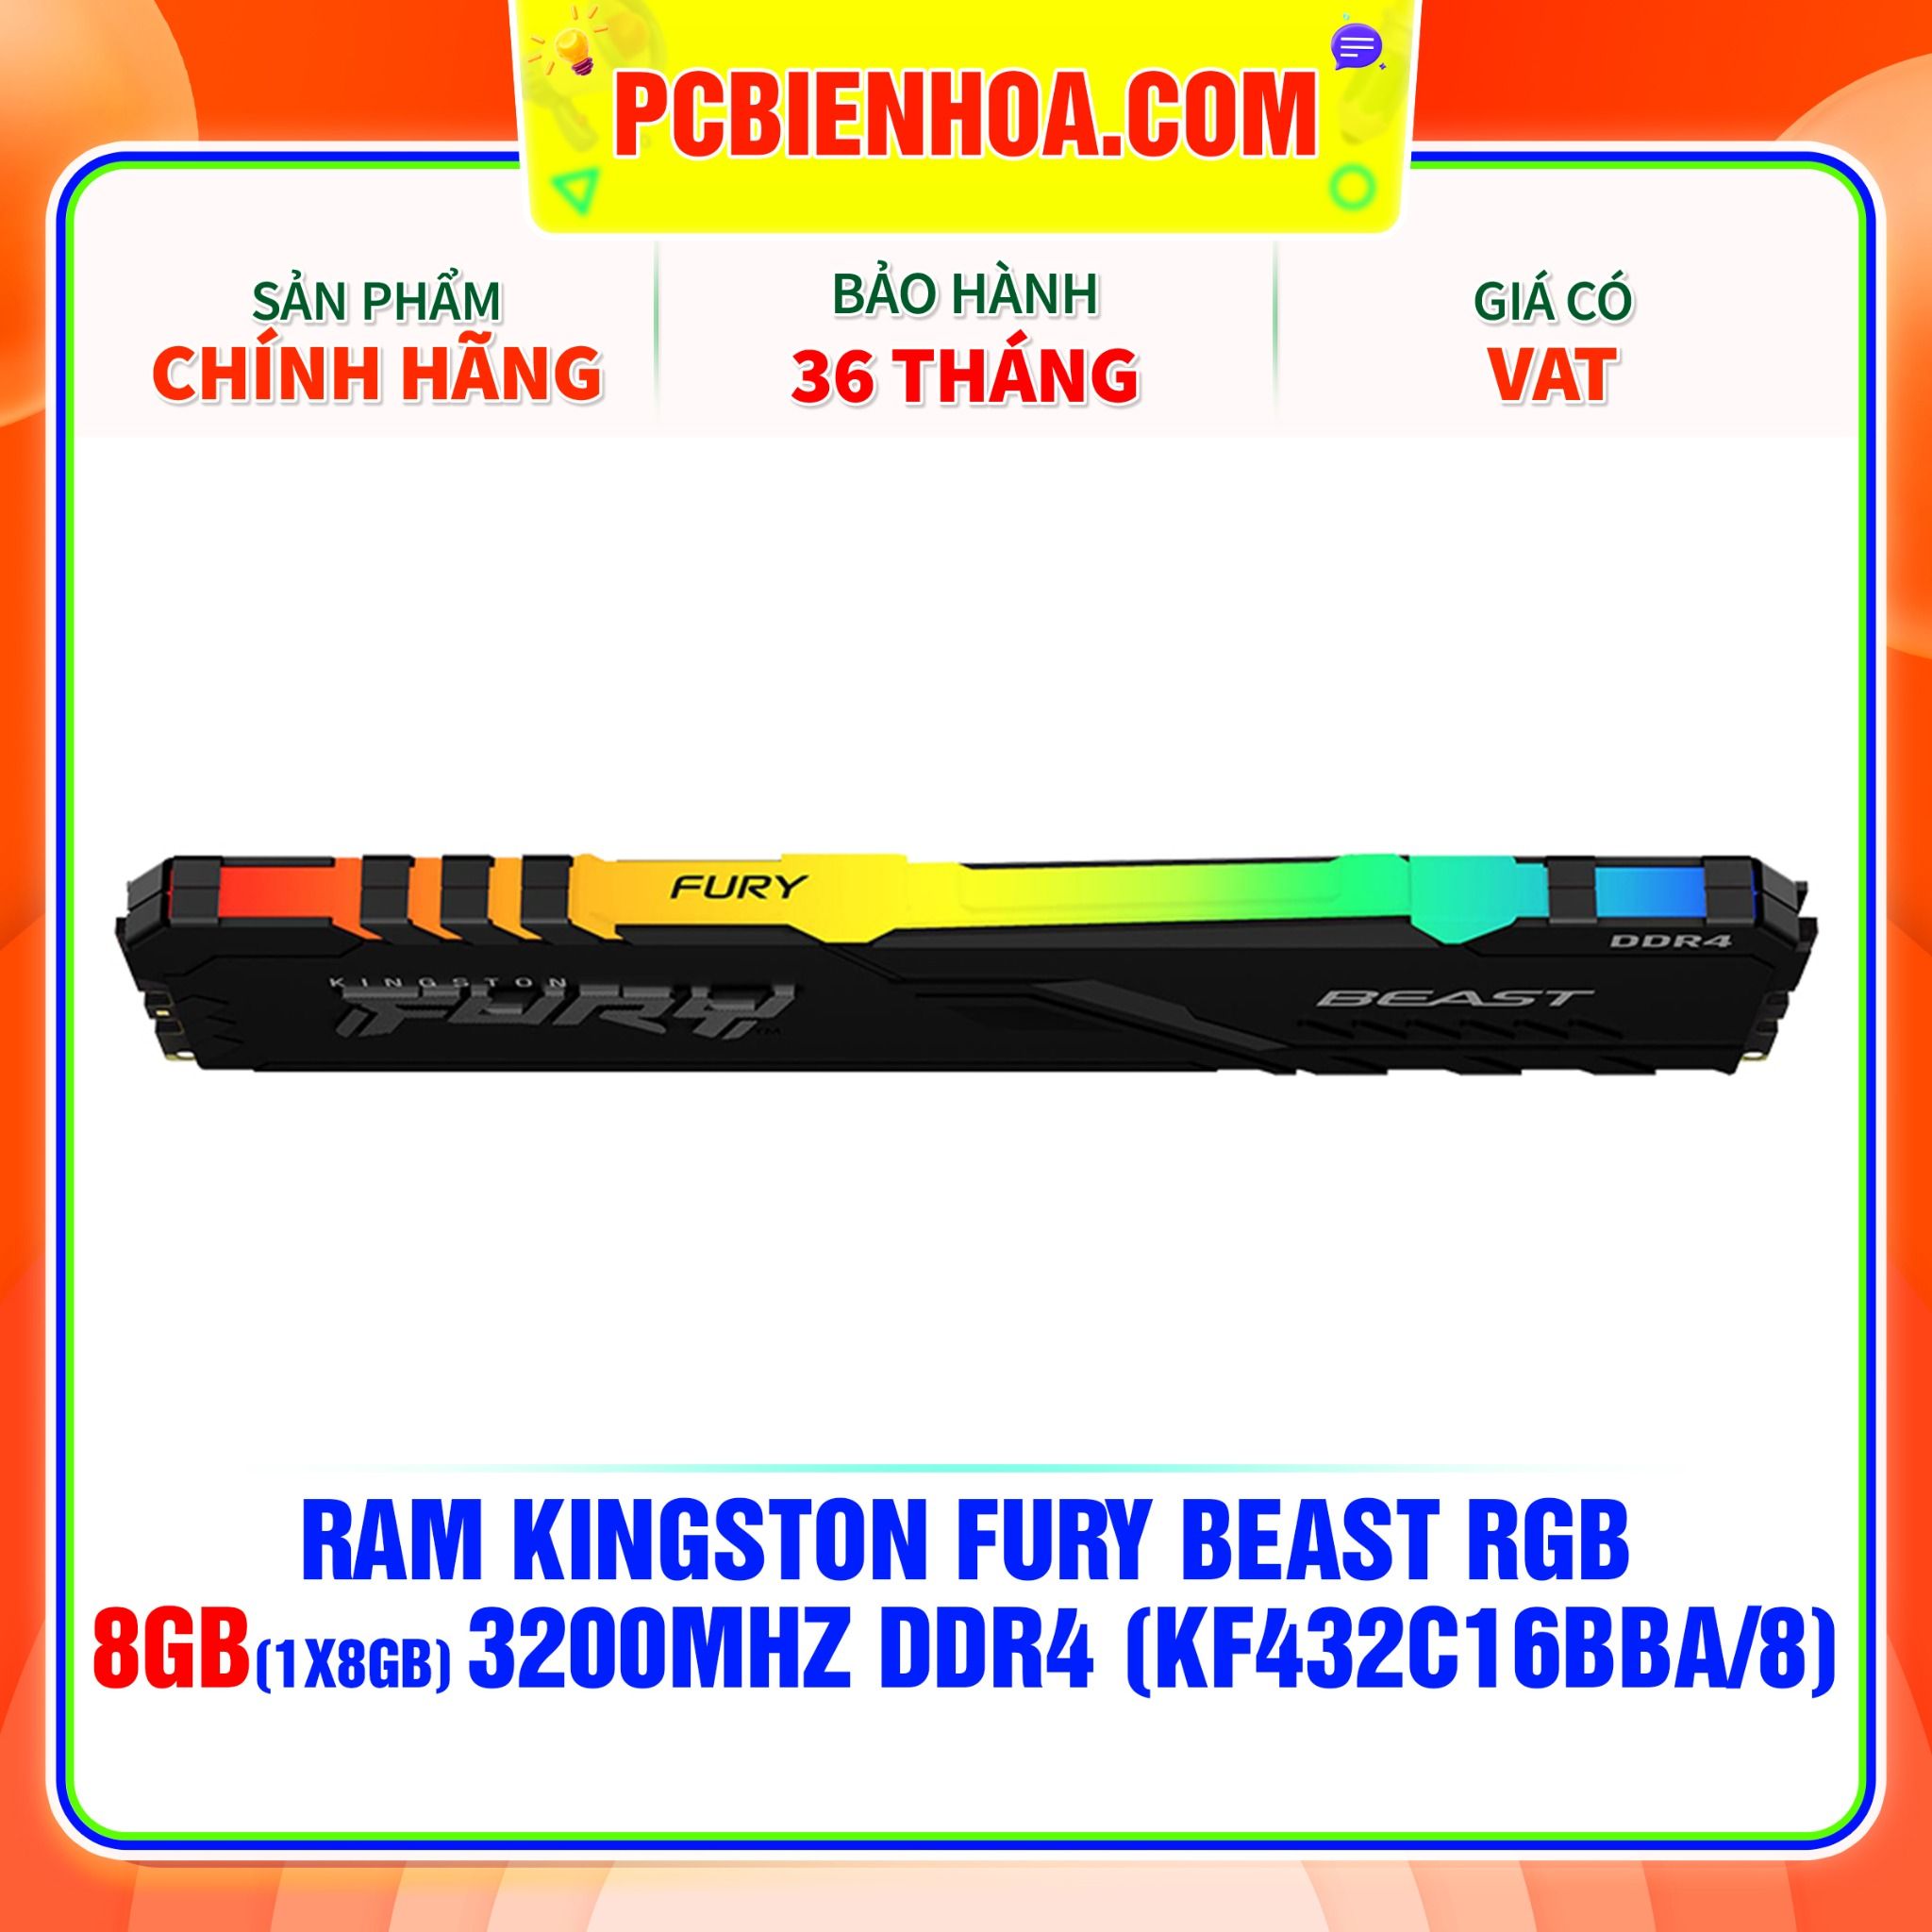  RAM KINGSTON FURY BEAST RGB 8GB (1x8GB) 3200MHz DDR4 ( KF432C16BBA/8 ) 